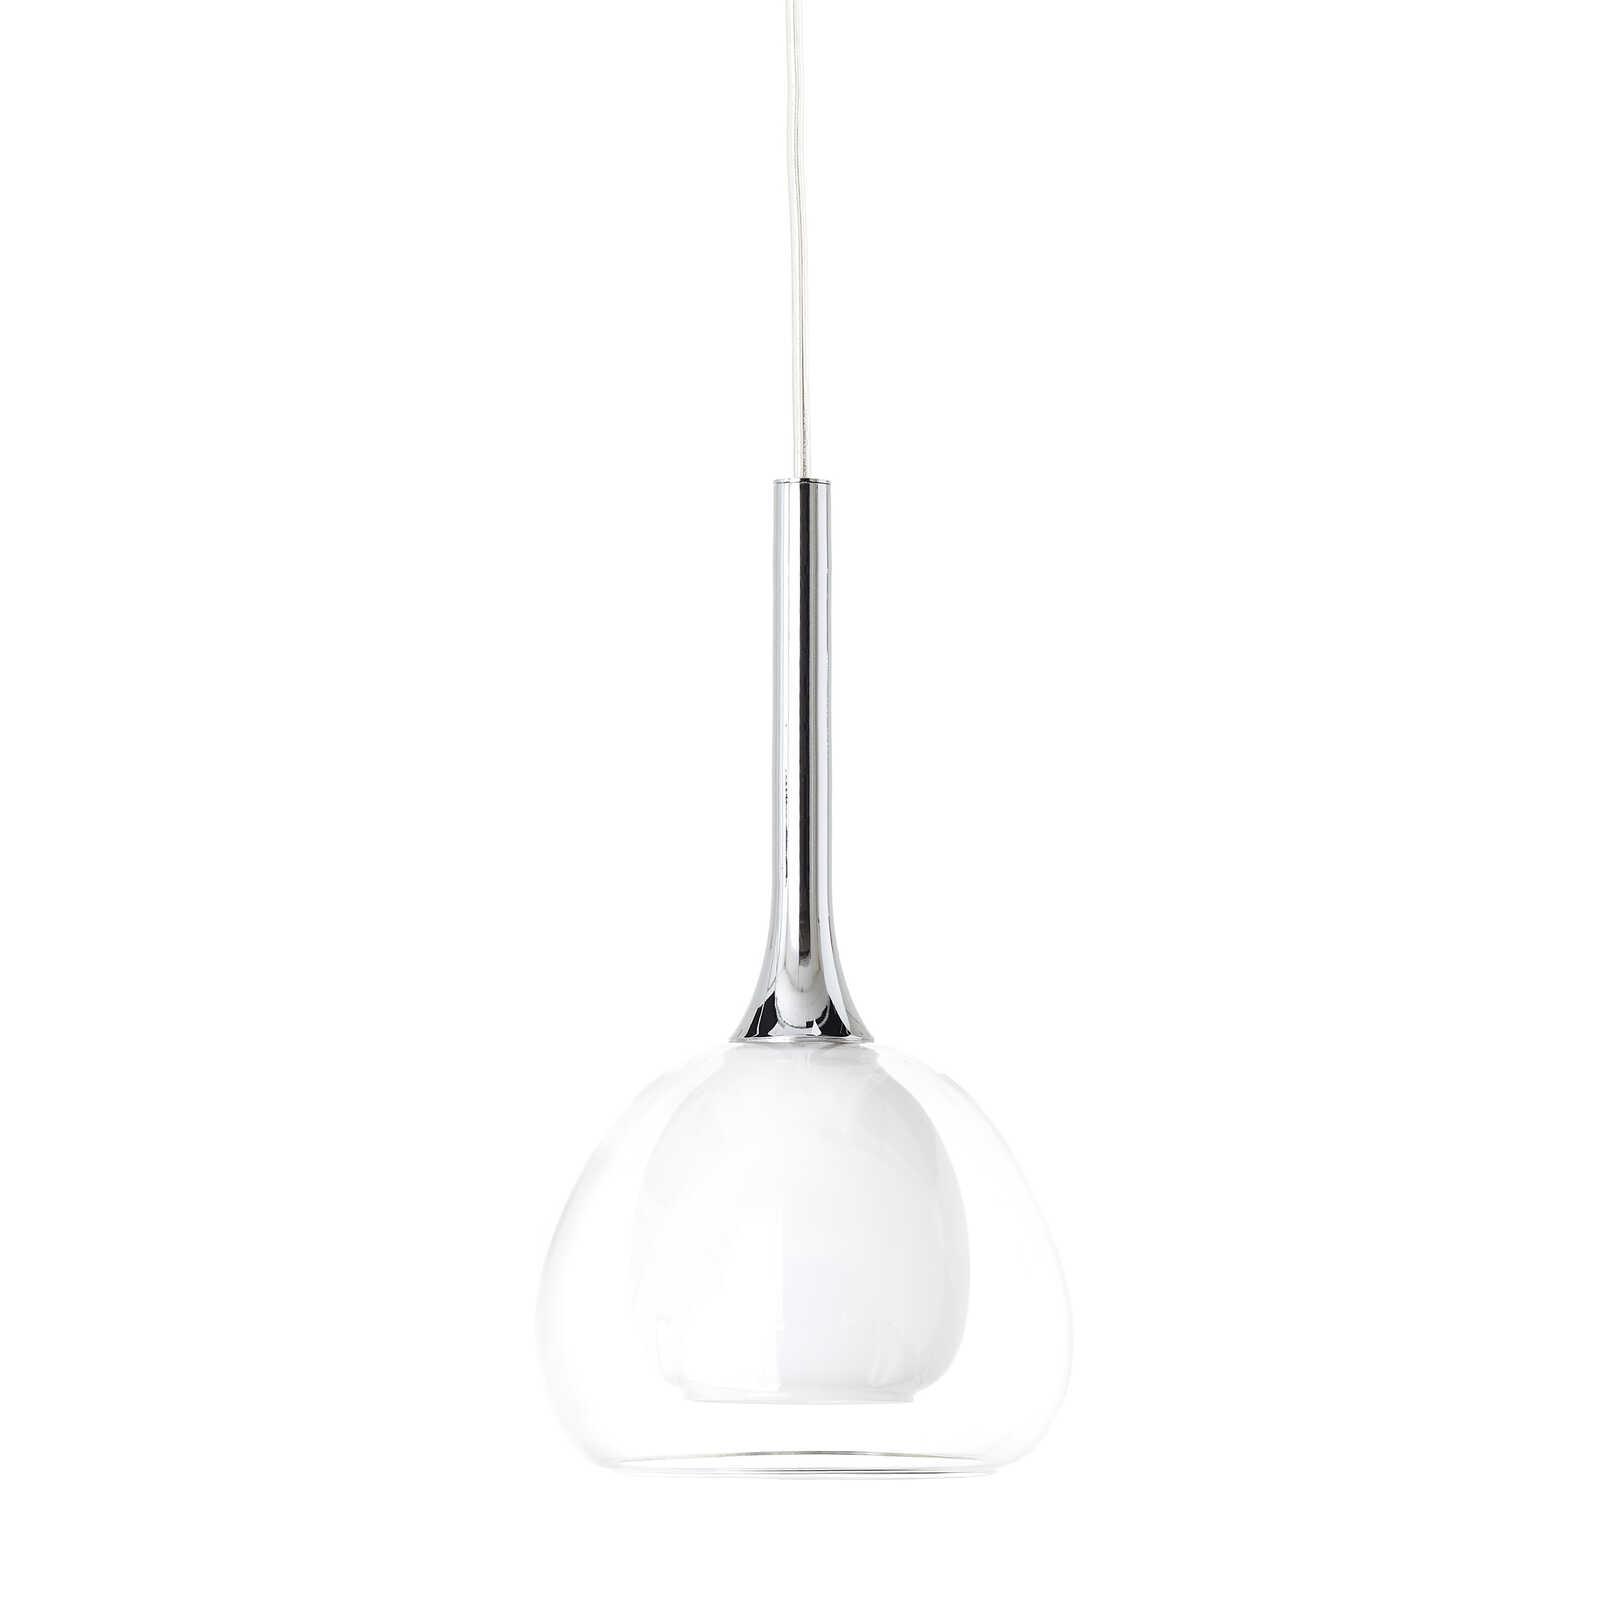             Glazen hanglamp - Iris 1 - Metallic
        